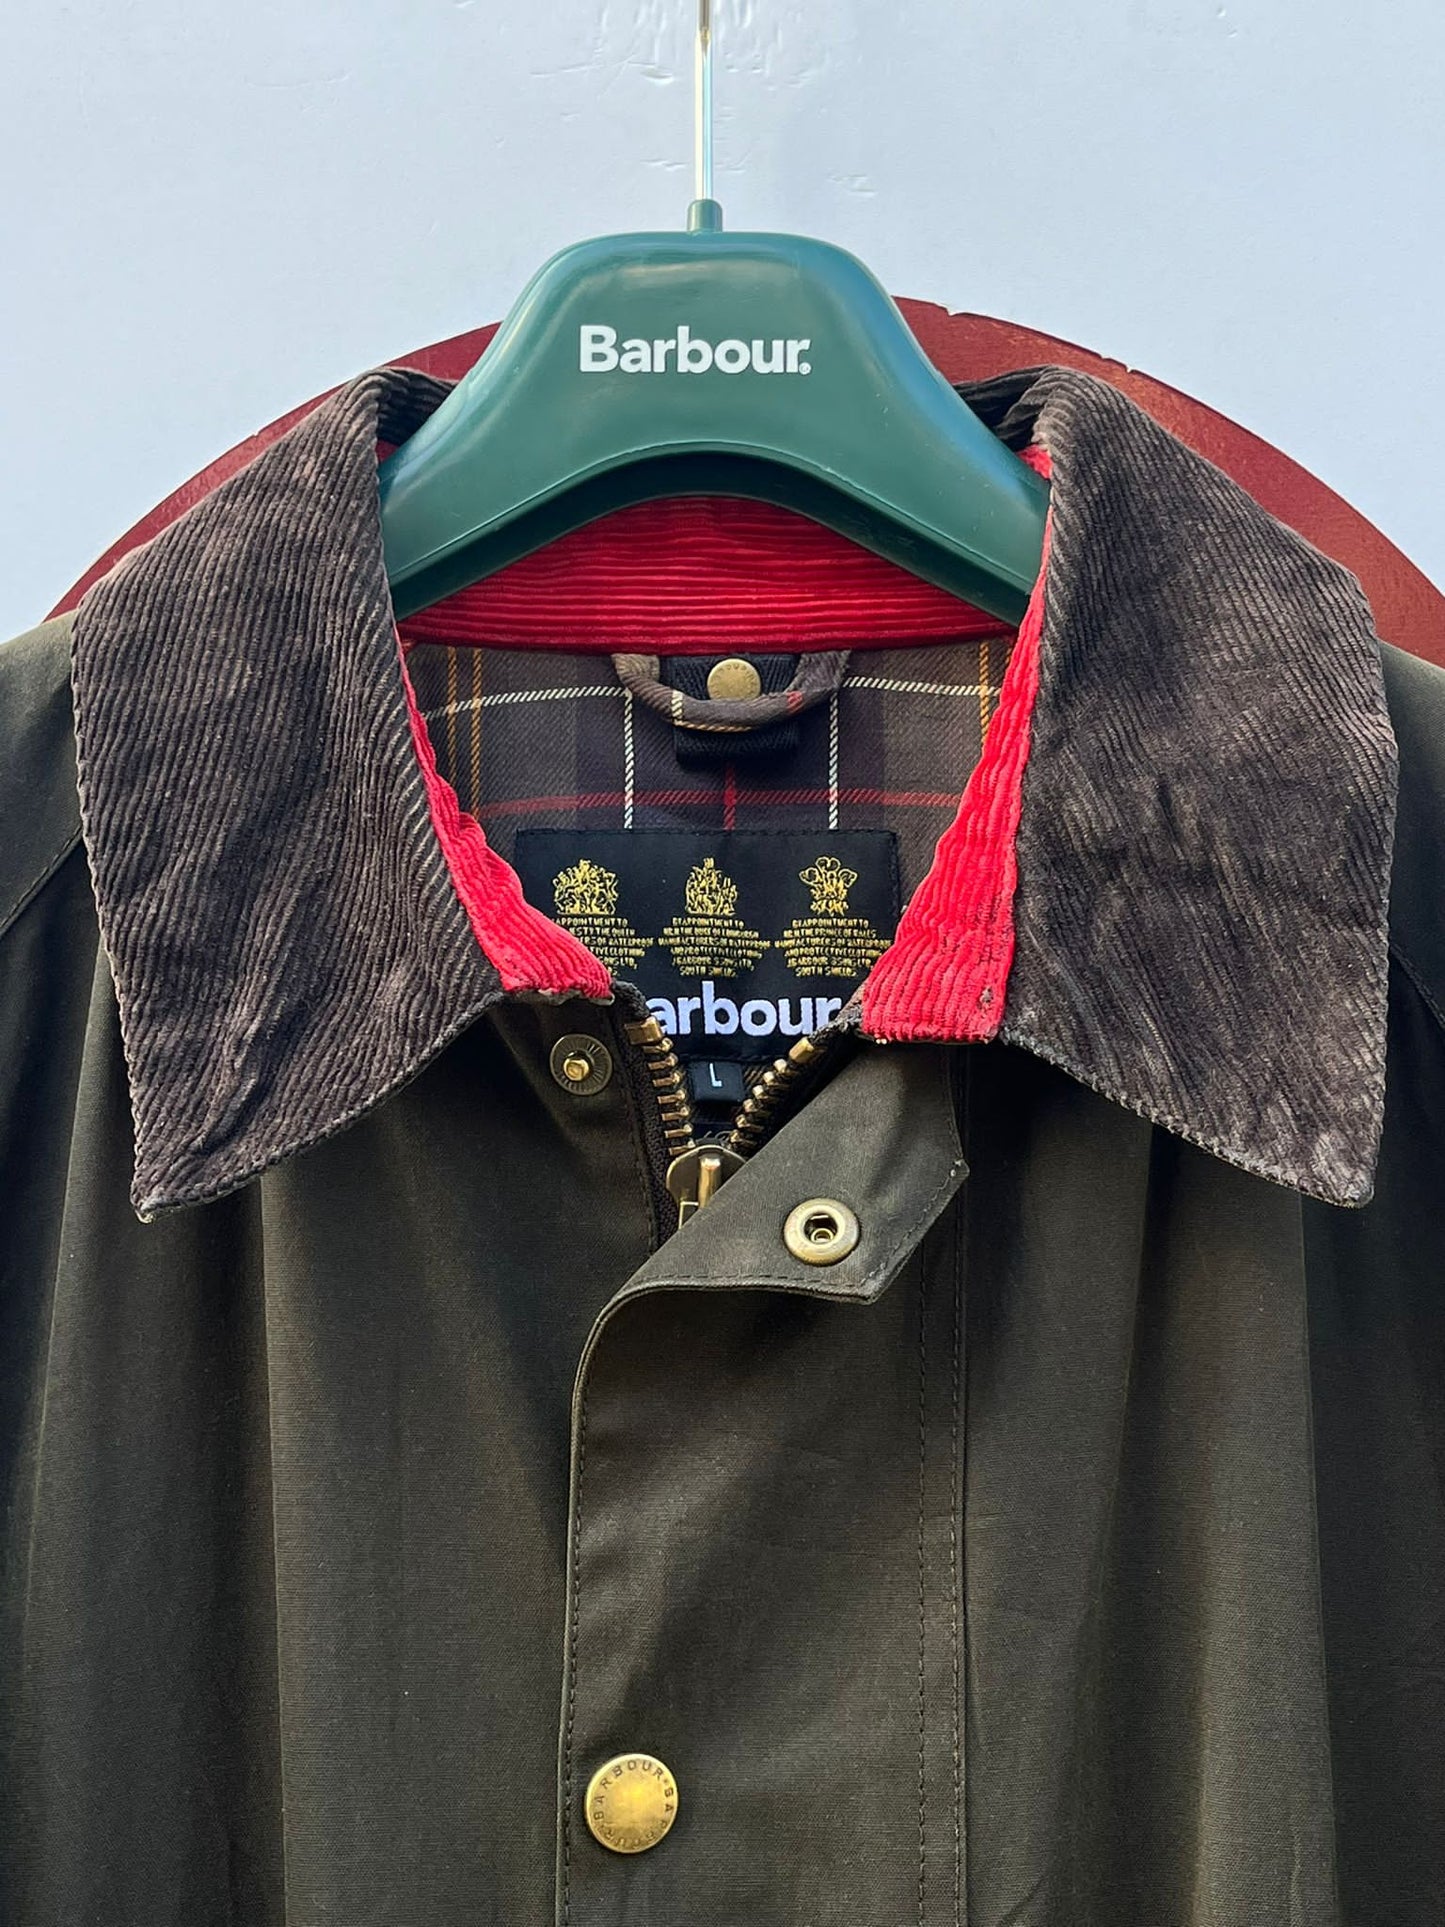 RARA Giacca Barbour Verde Cerata Large  - Man Green  waxed jacket Size large